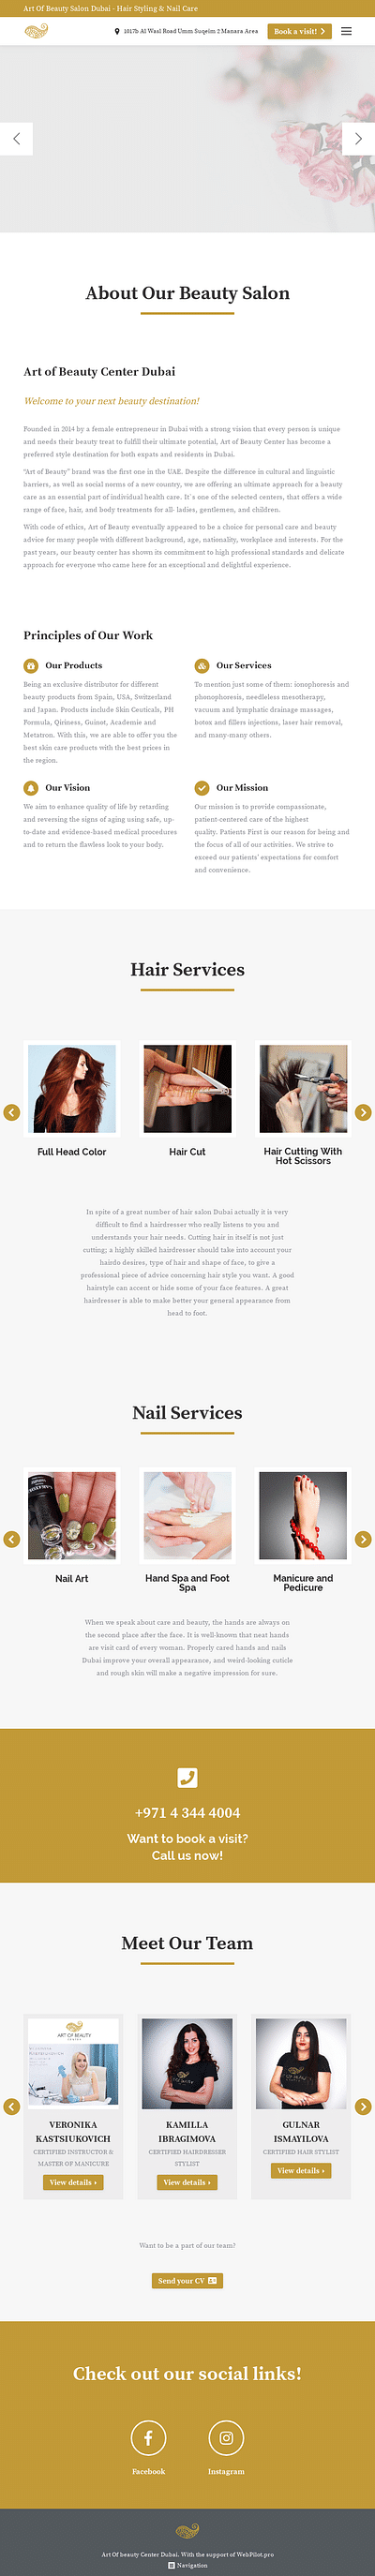 nails and hair artofbeautycenter - Webseitengestaltung